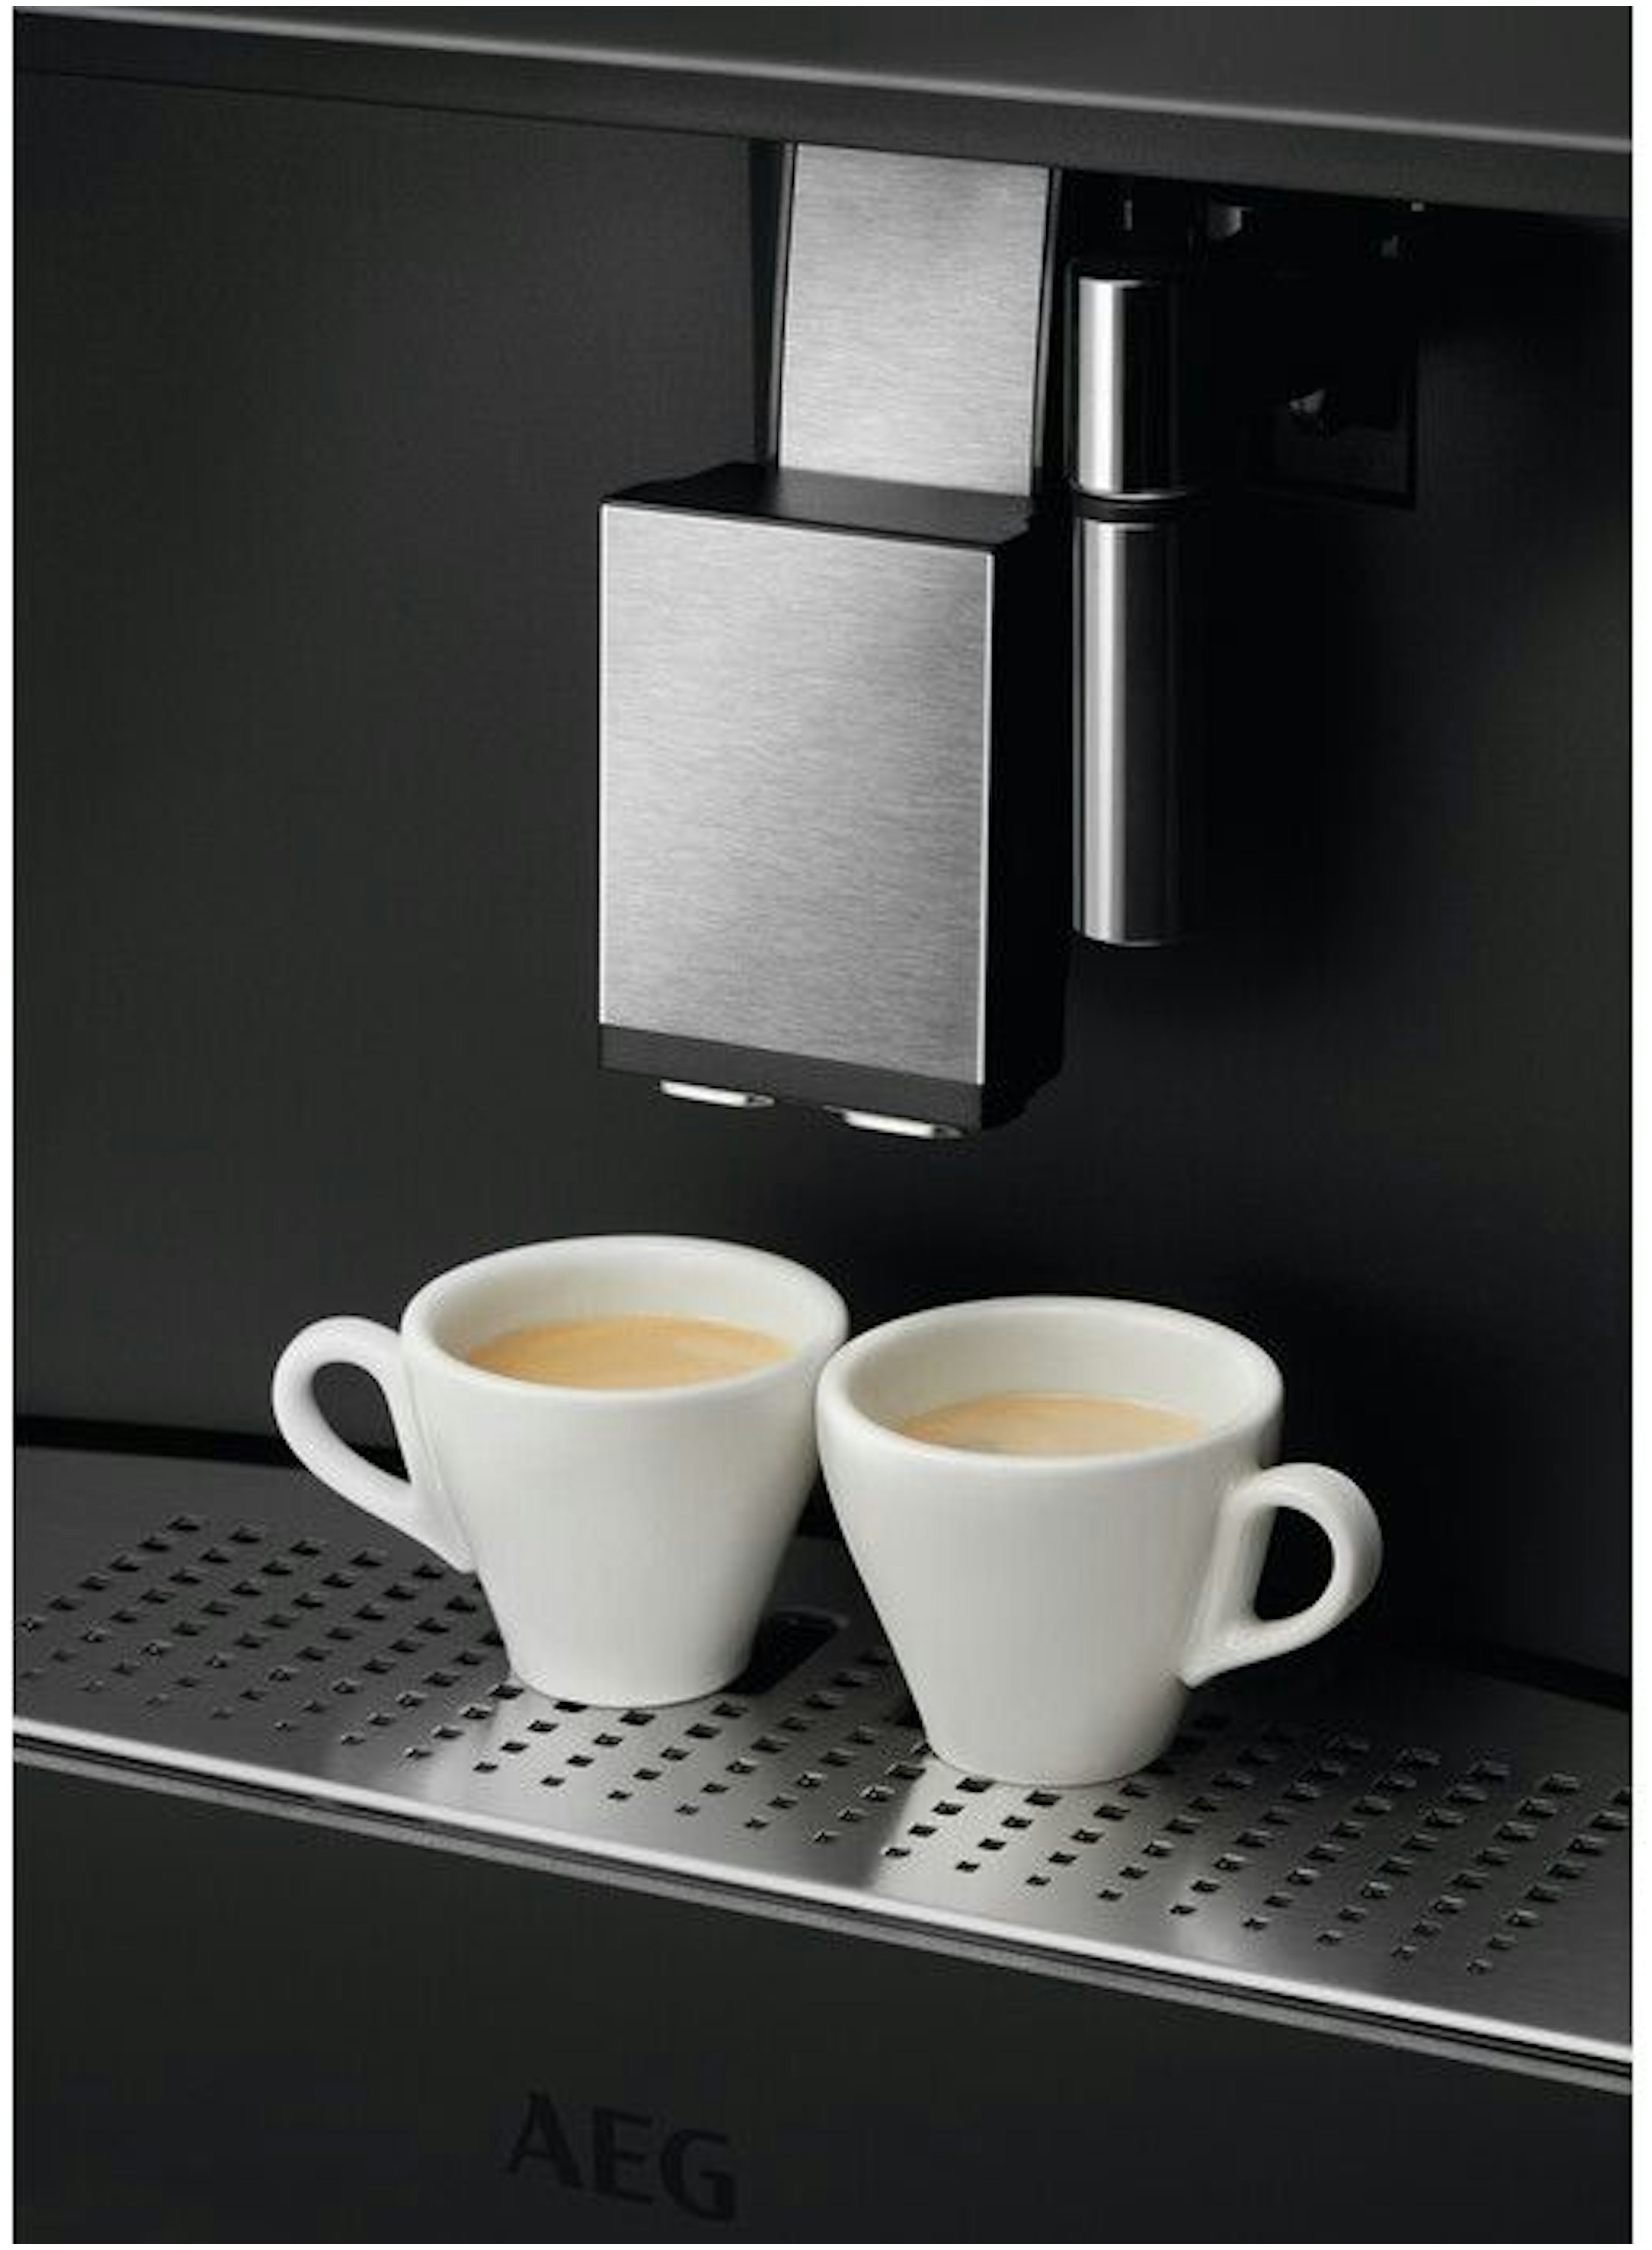 AEG KKA894500T inbouw koffiemachine afbeelding 5